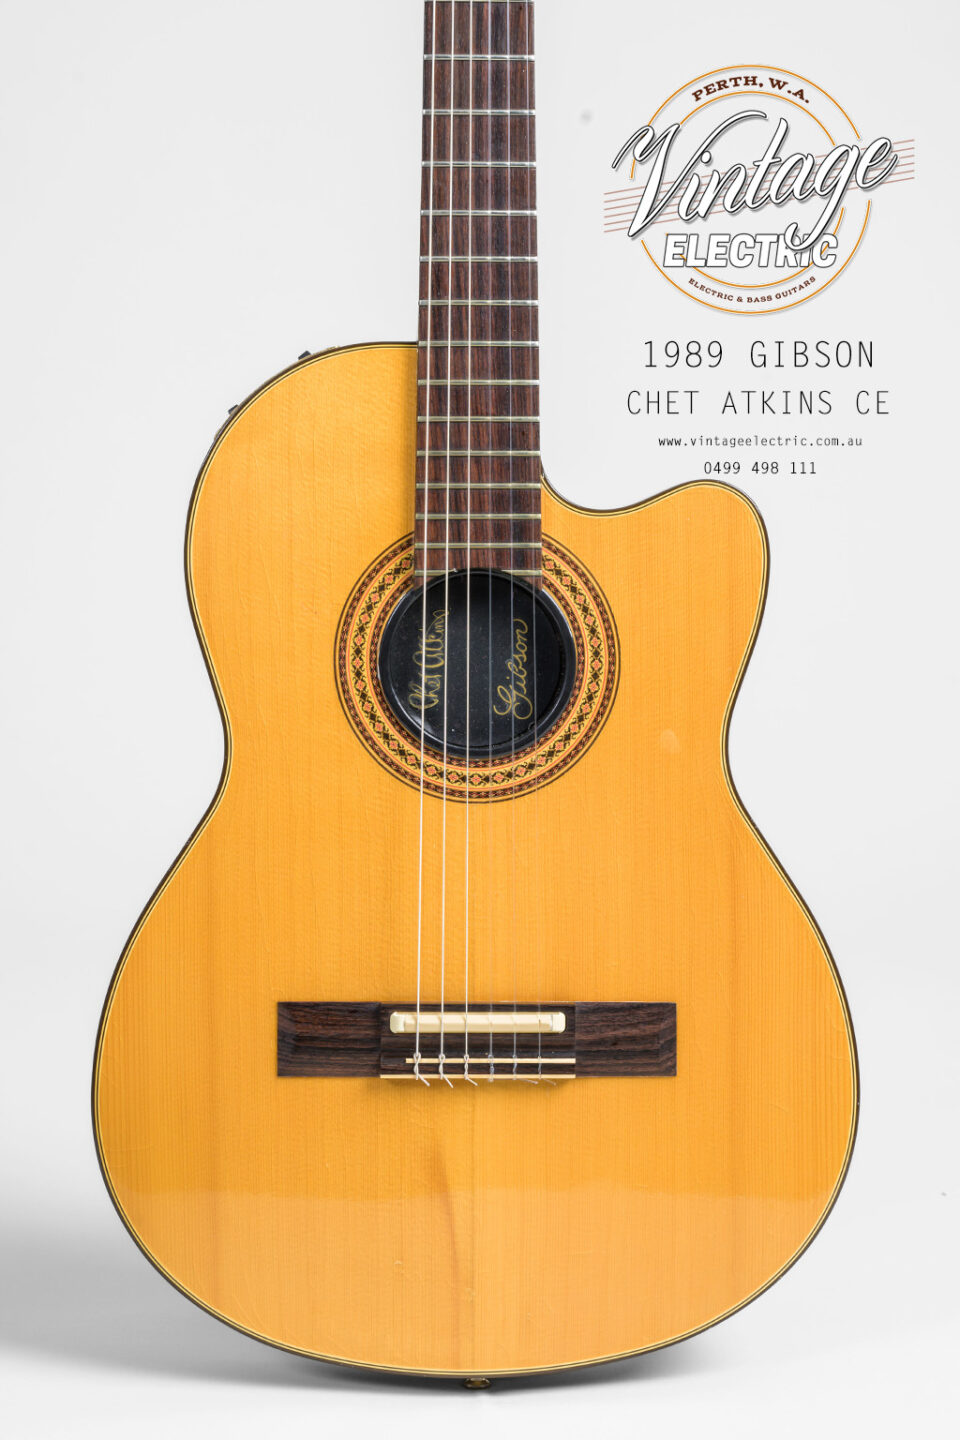 1989 Gibson Chet Atkins CE Body